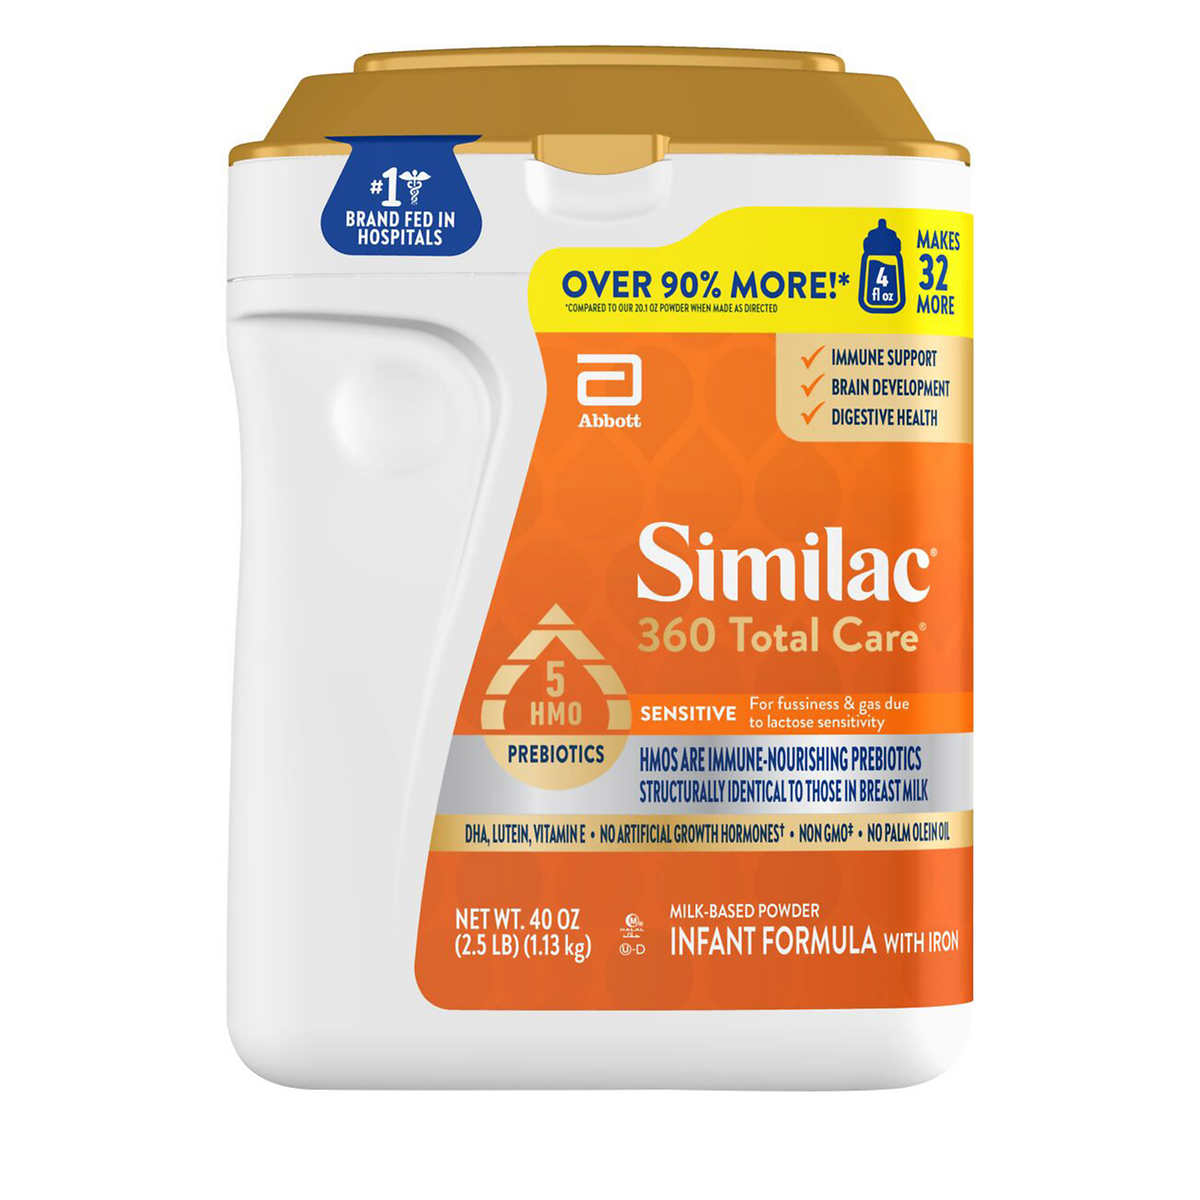 Similac 360 Total Care Sensitive 5 HMO's, Non-GMO Infant Formula Powder, 40 Oz